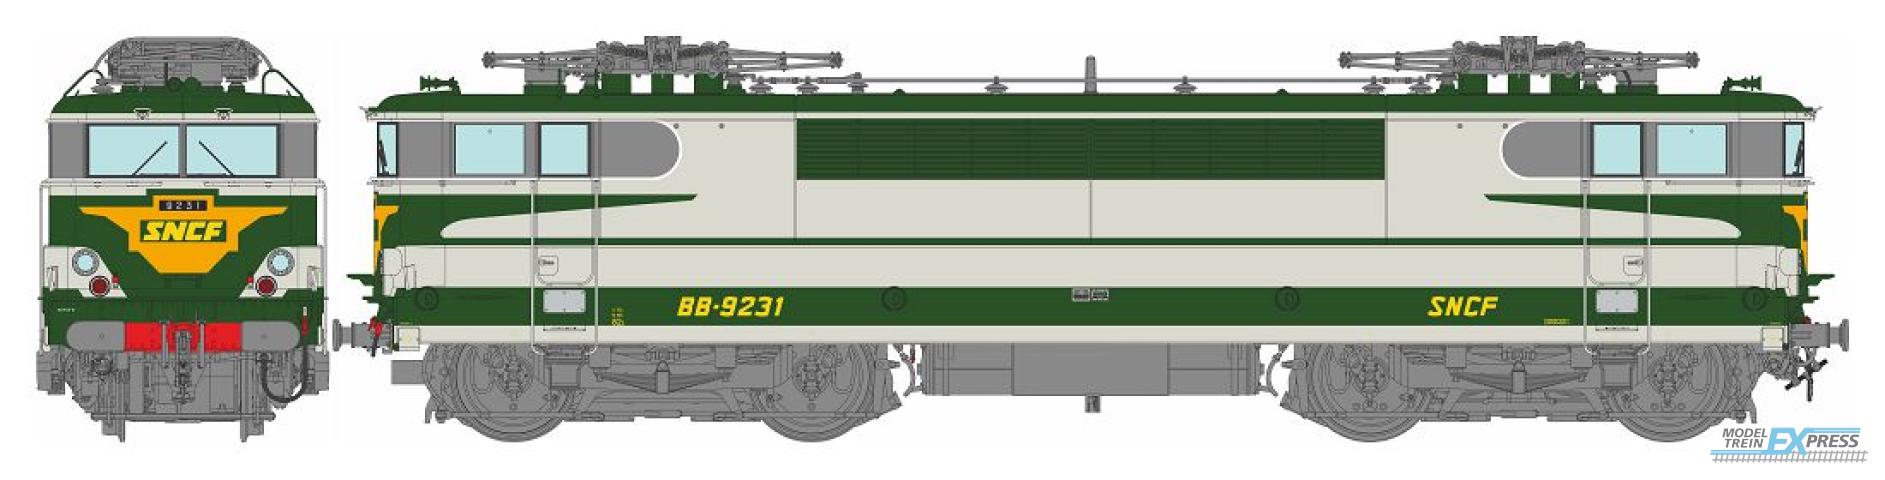 REE models MB-196 BB 9231 Green "ARZENS" BORDEAUX Era IV-V - ANALOG DC